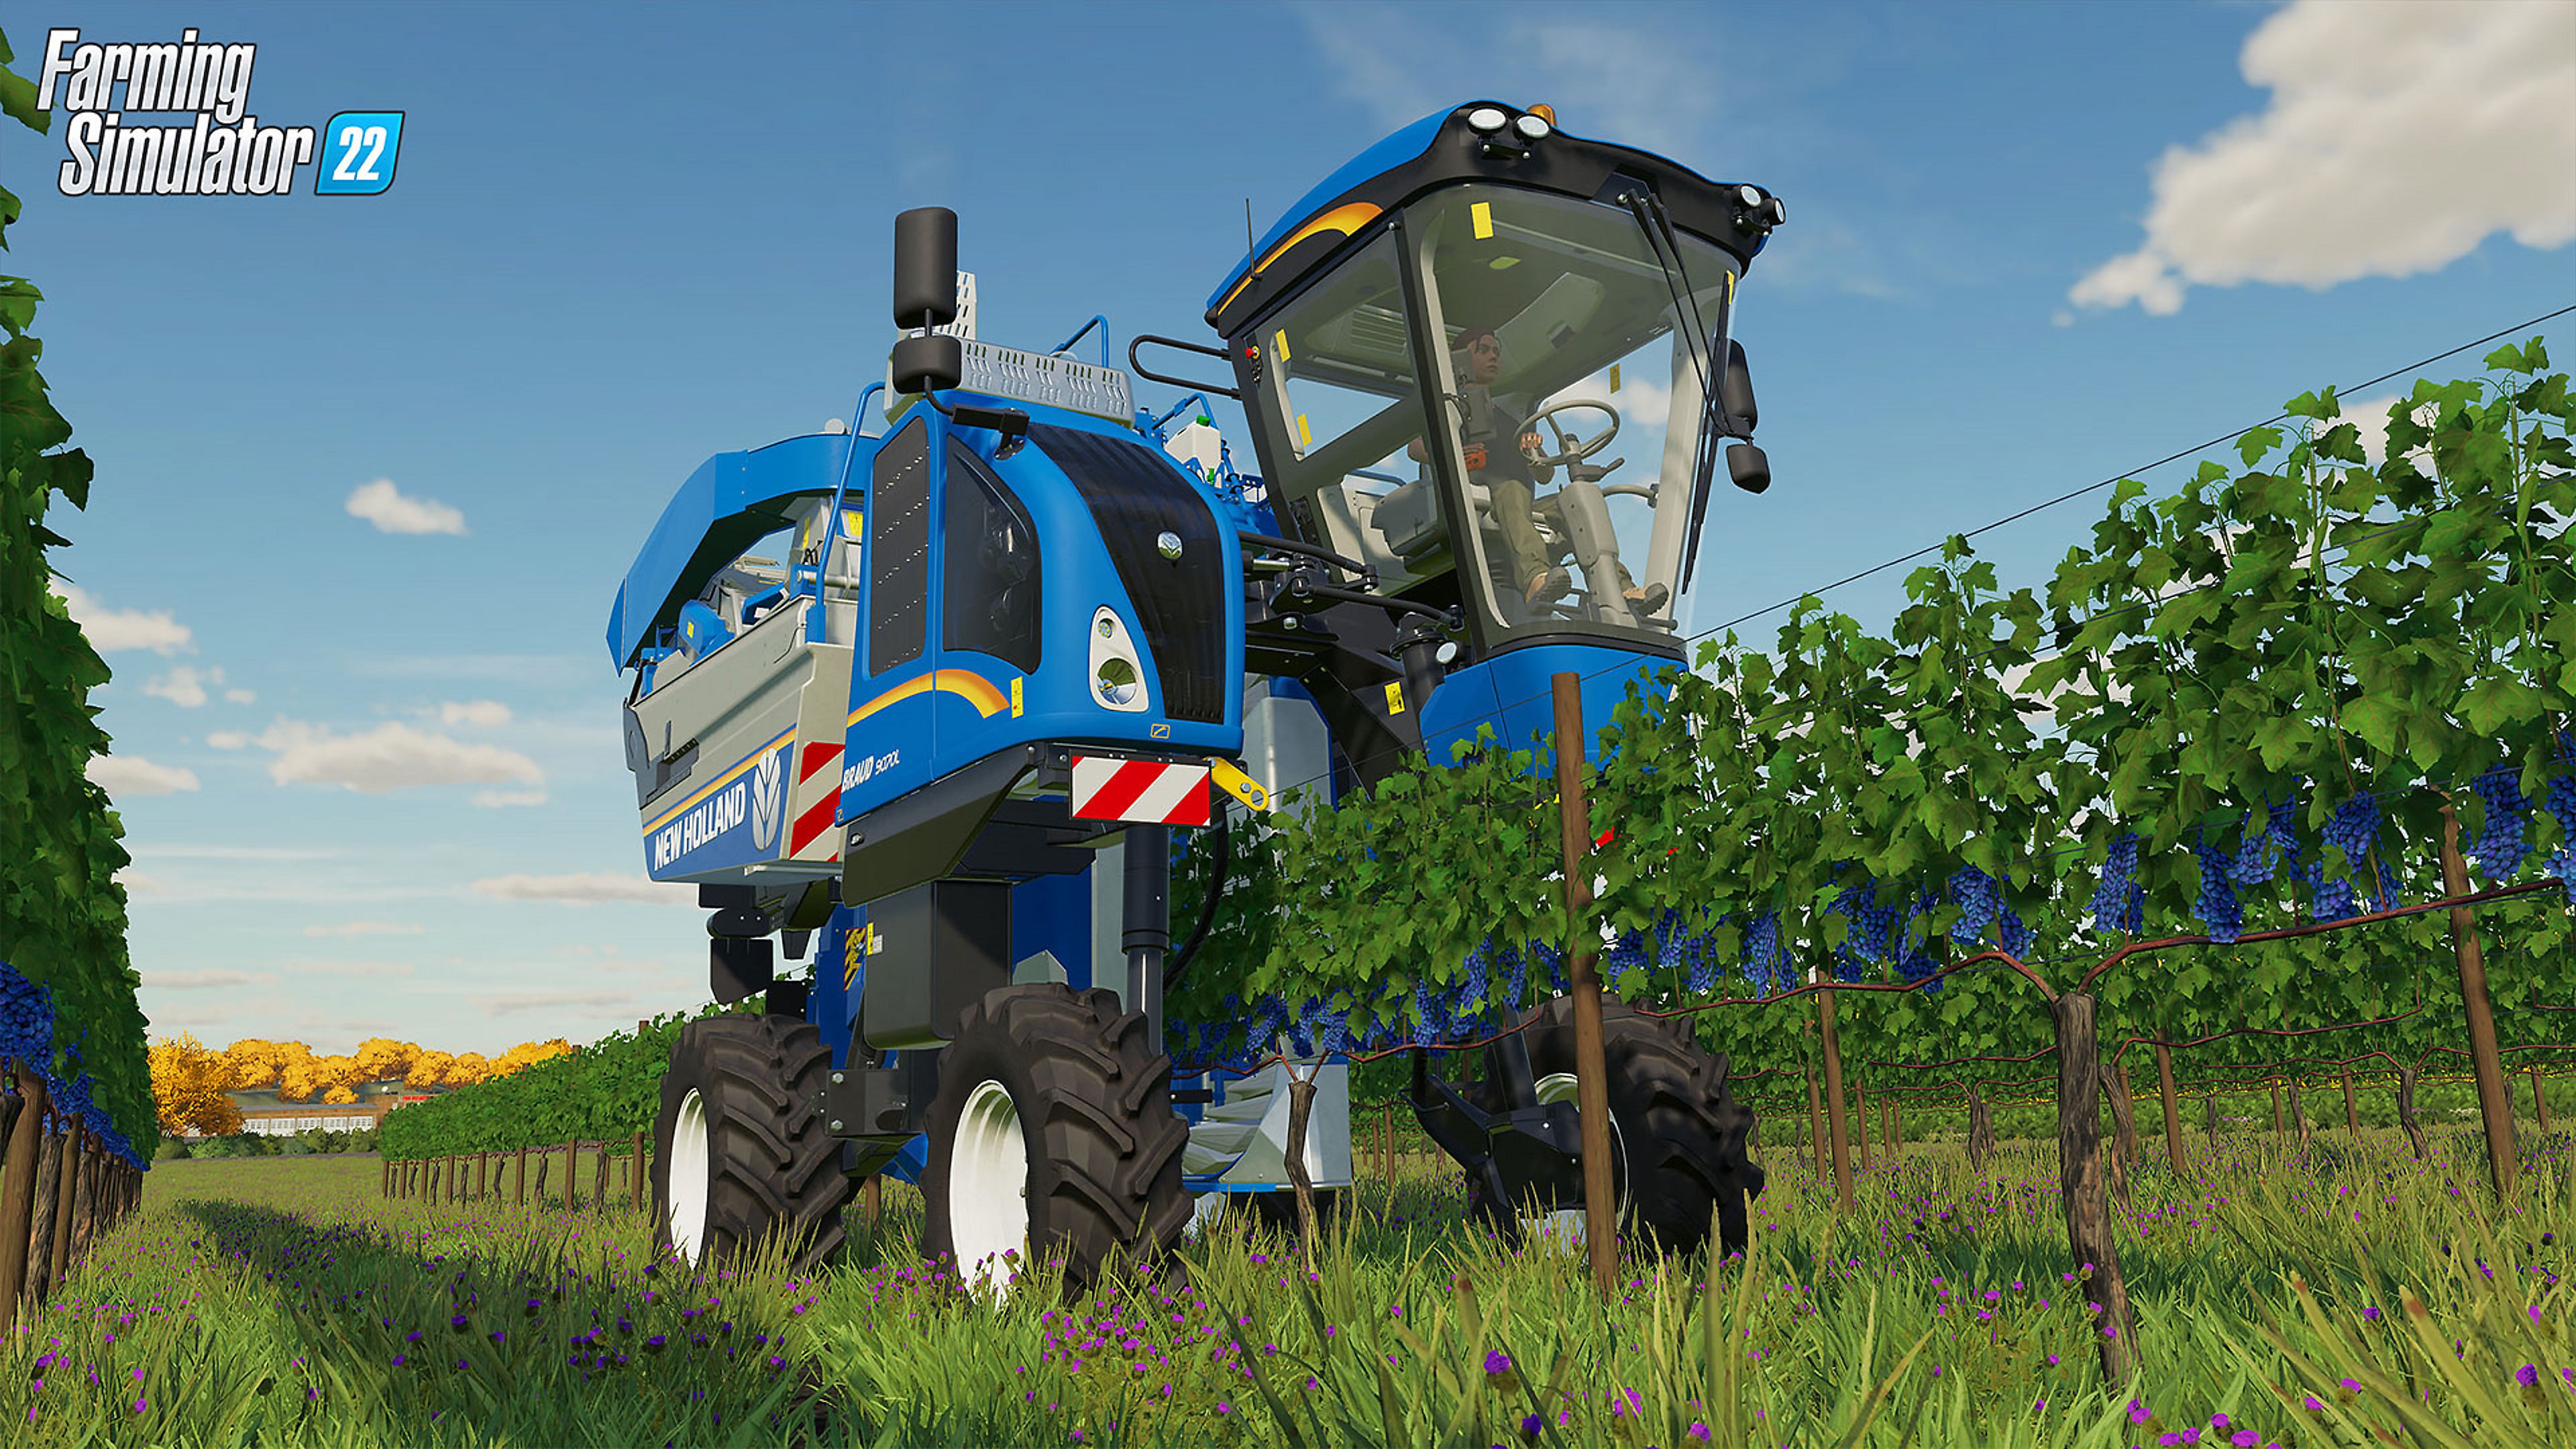 Farming Simulator 22 – снимок экрана